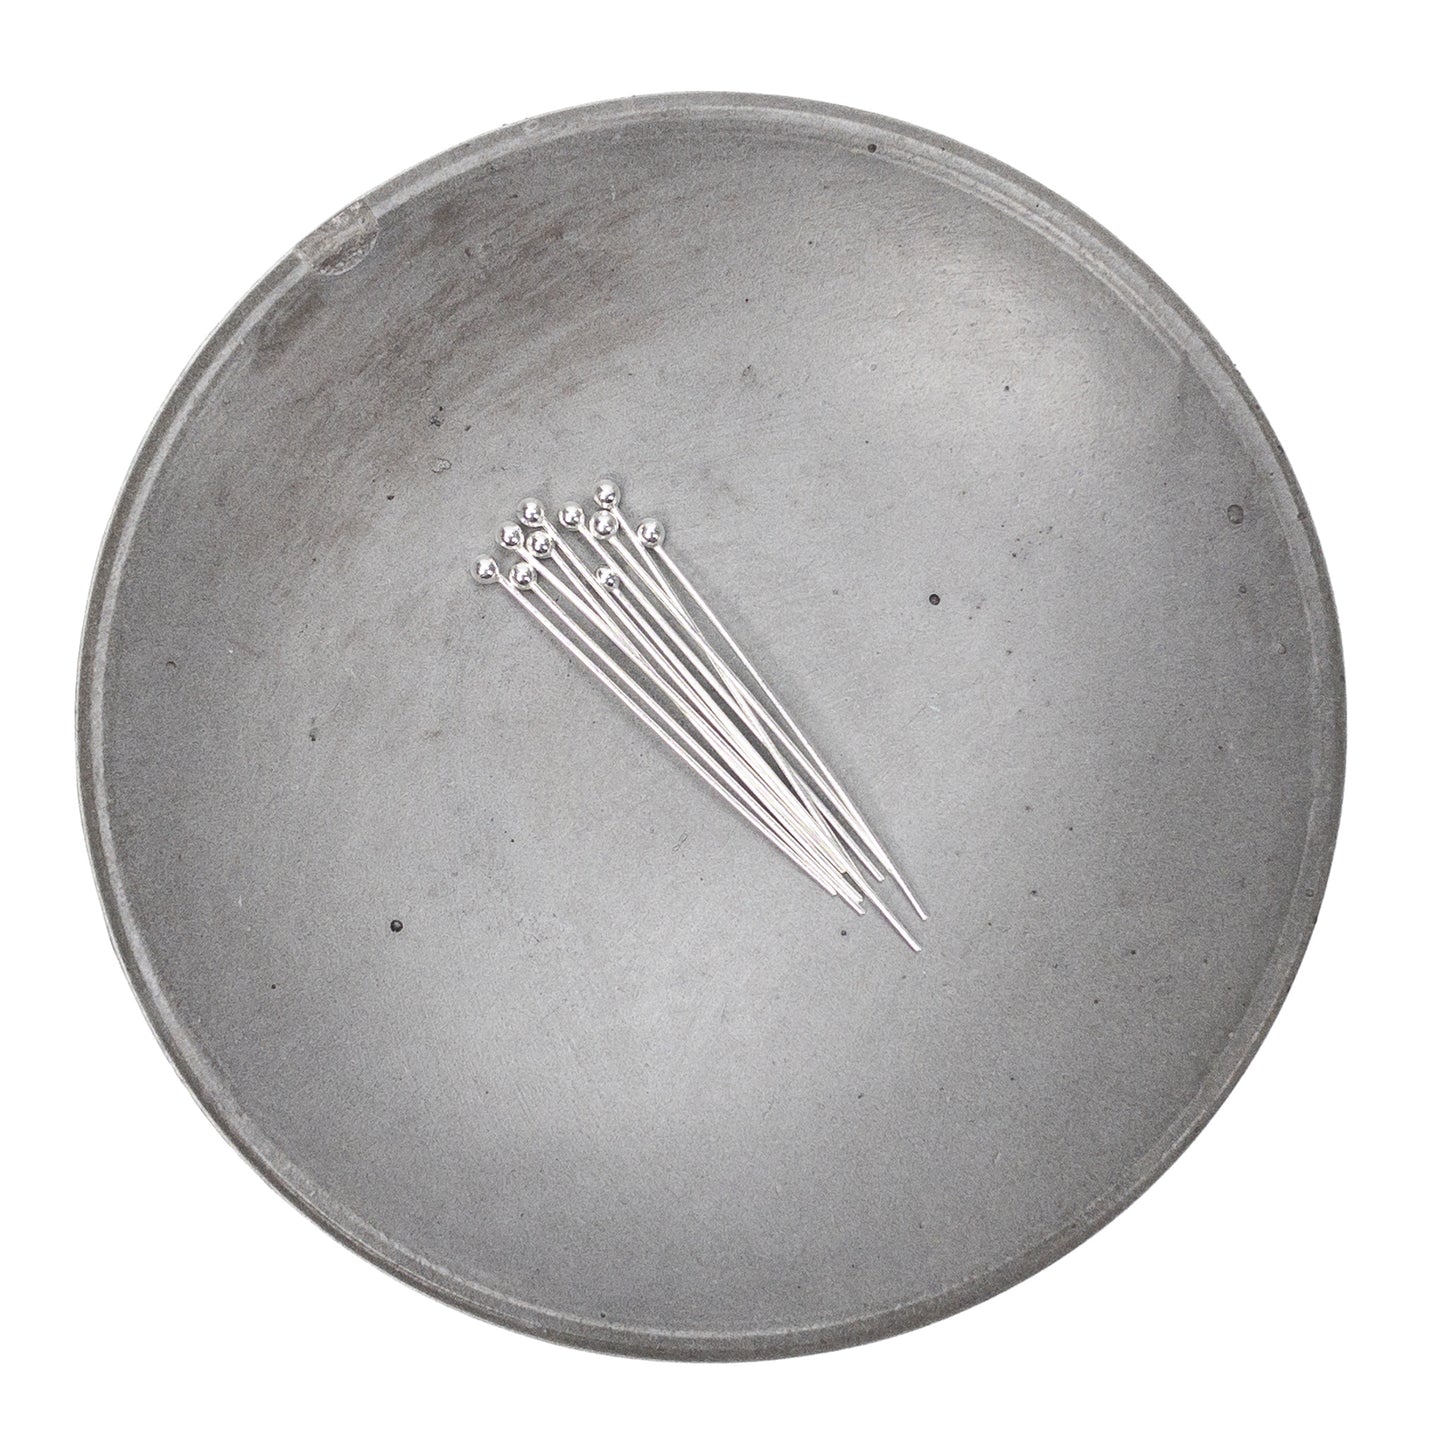 Headpin - 1" 26-Gauge BALL (2 Metal Options Available) - 10 pcs.